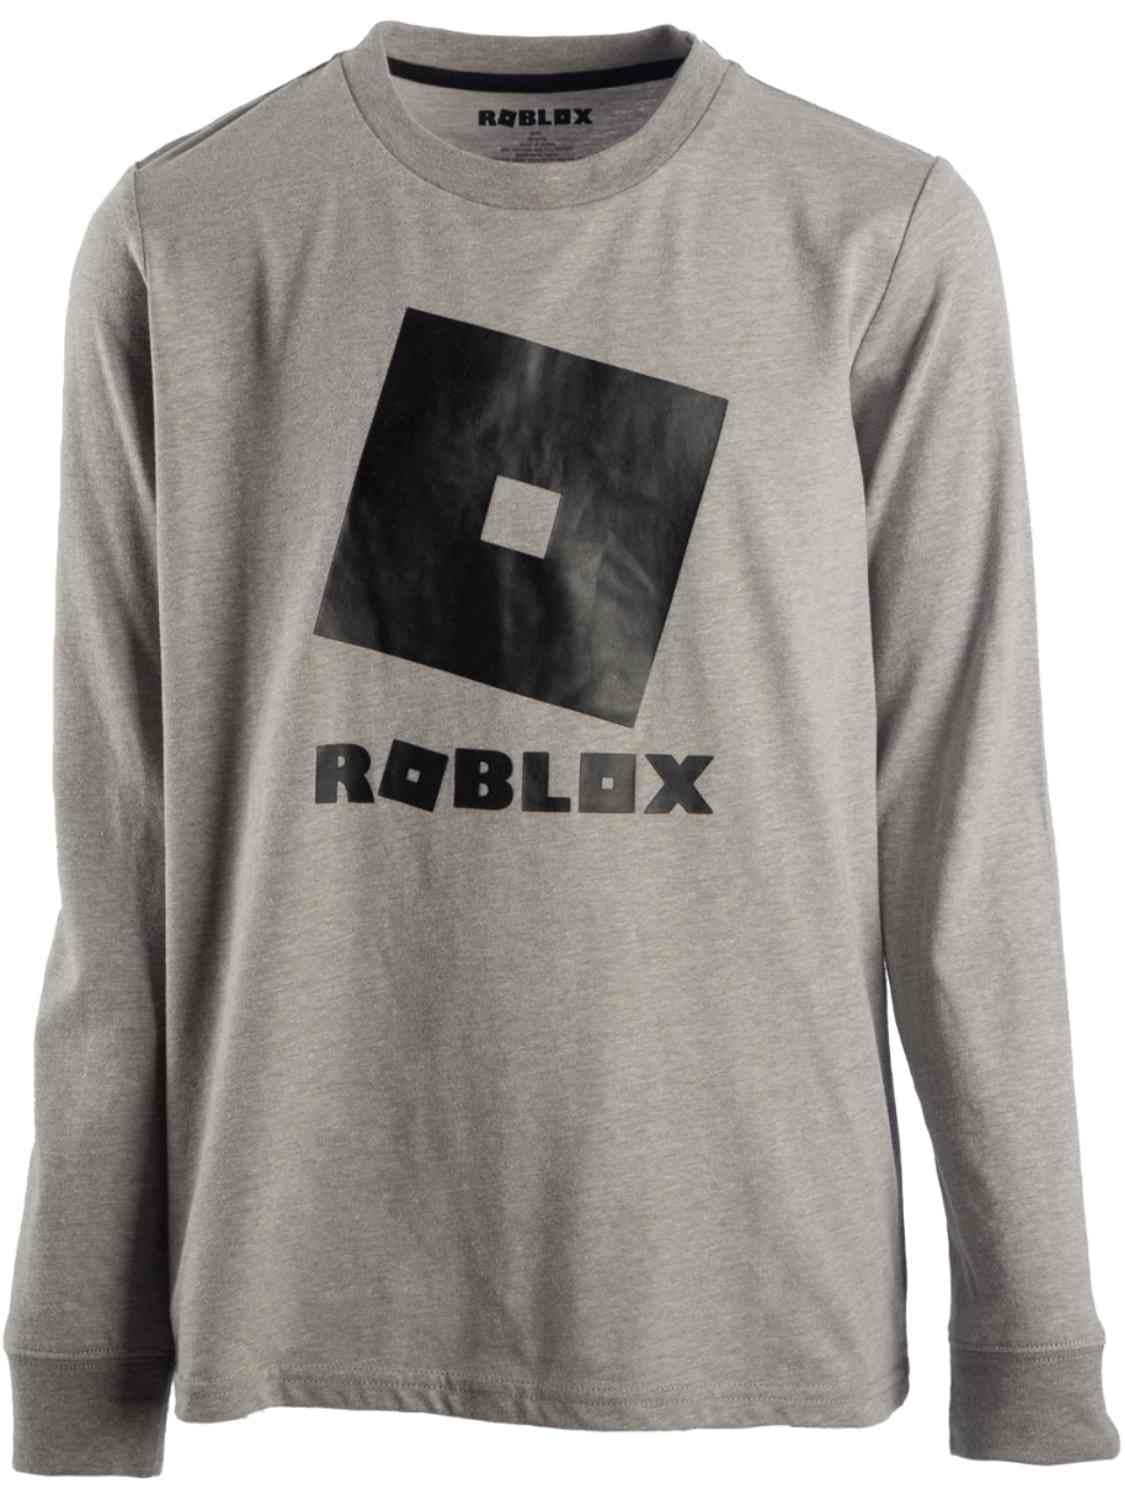 Boys Gray Black Roblox T Shirt Long Sleeve Tee Shirt Walmart Com Walmart Com - fire hand with black shirt roblox